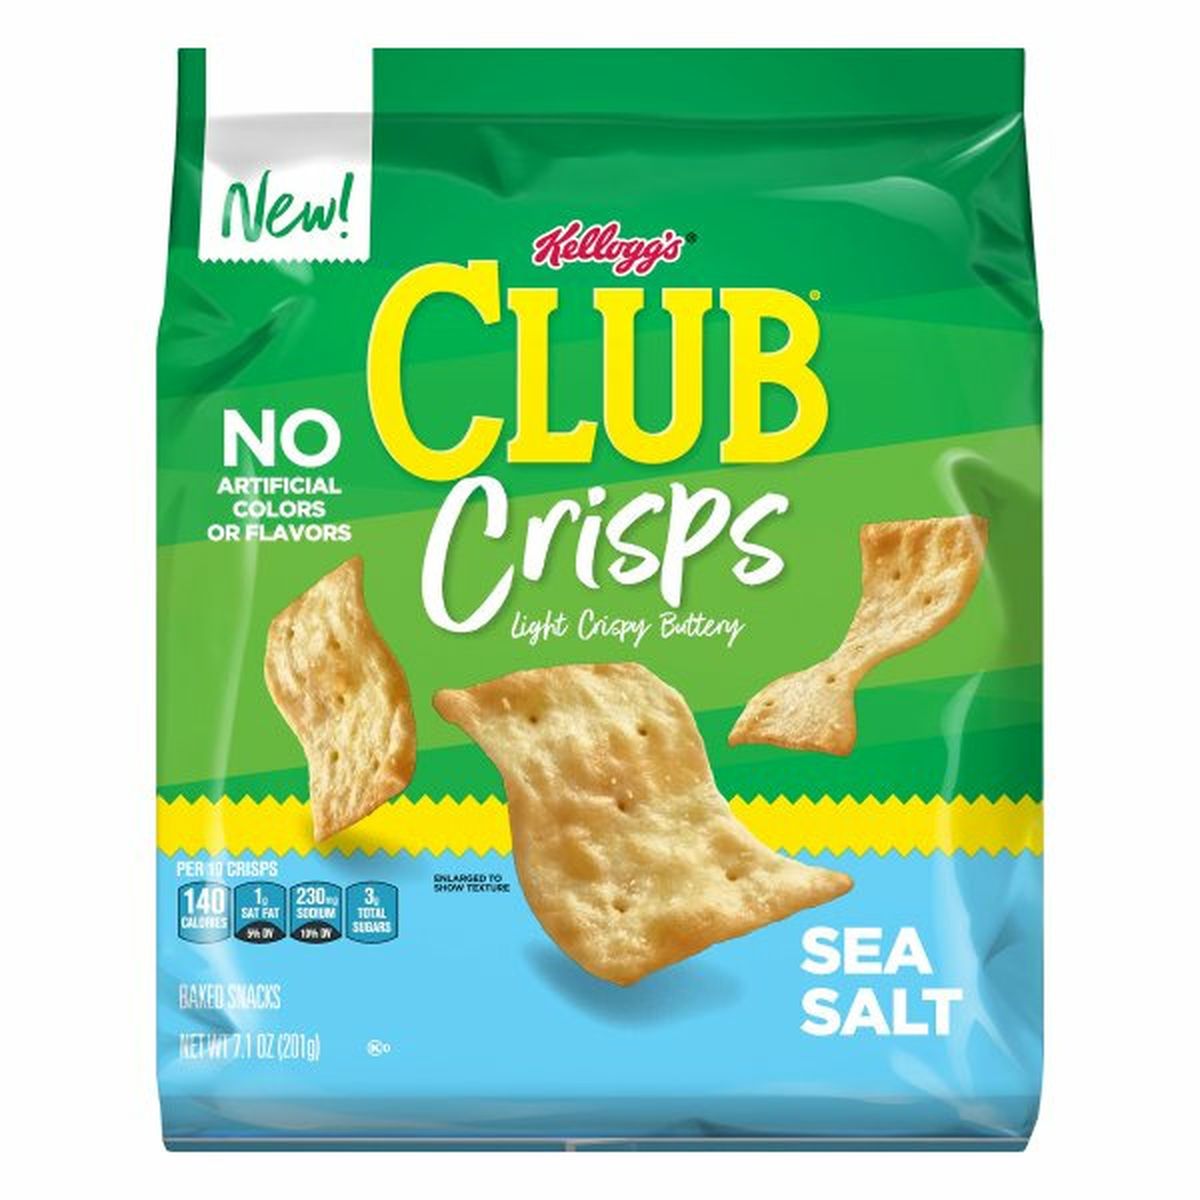 Calories in Kellogg's Club Crisps Baked Snacks, Sea Salt